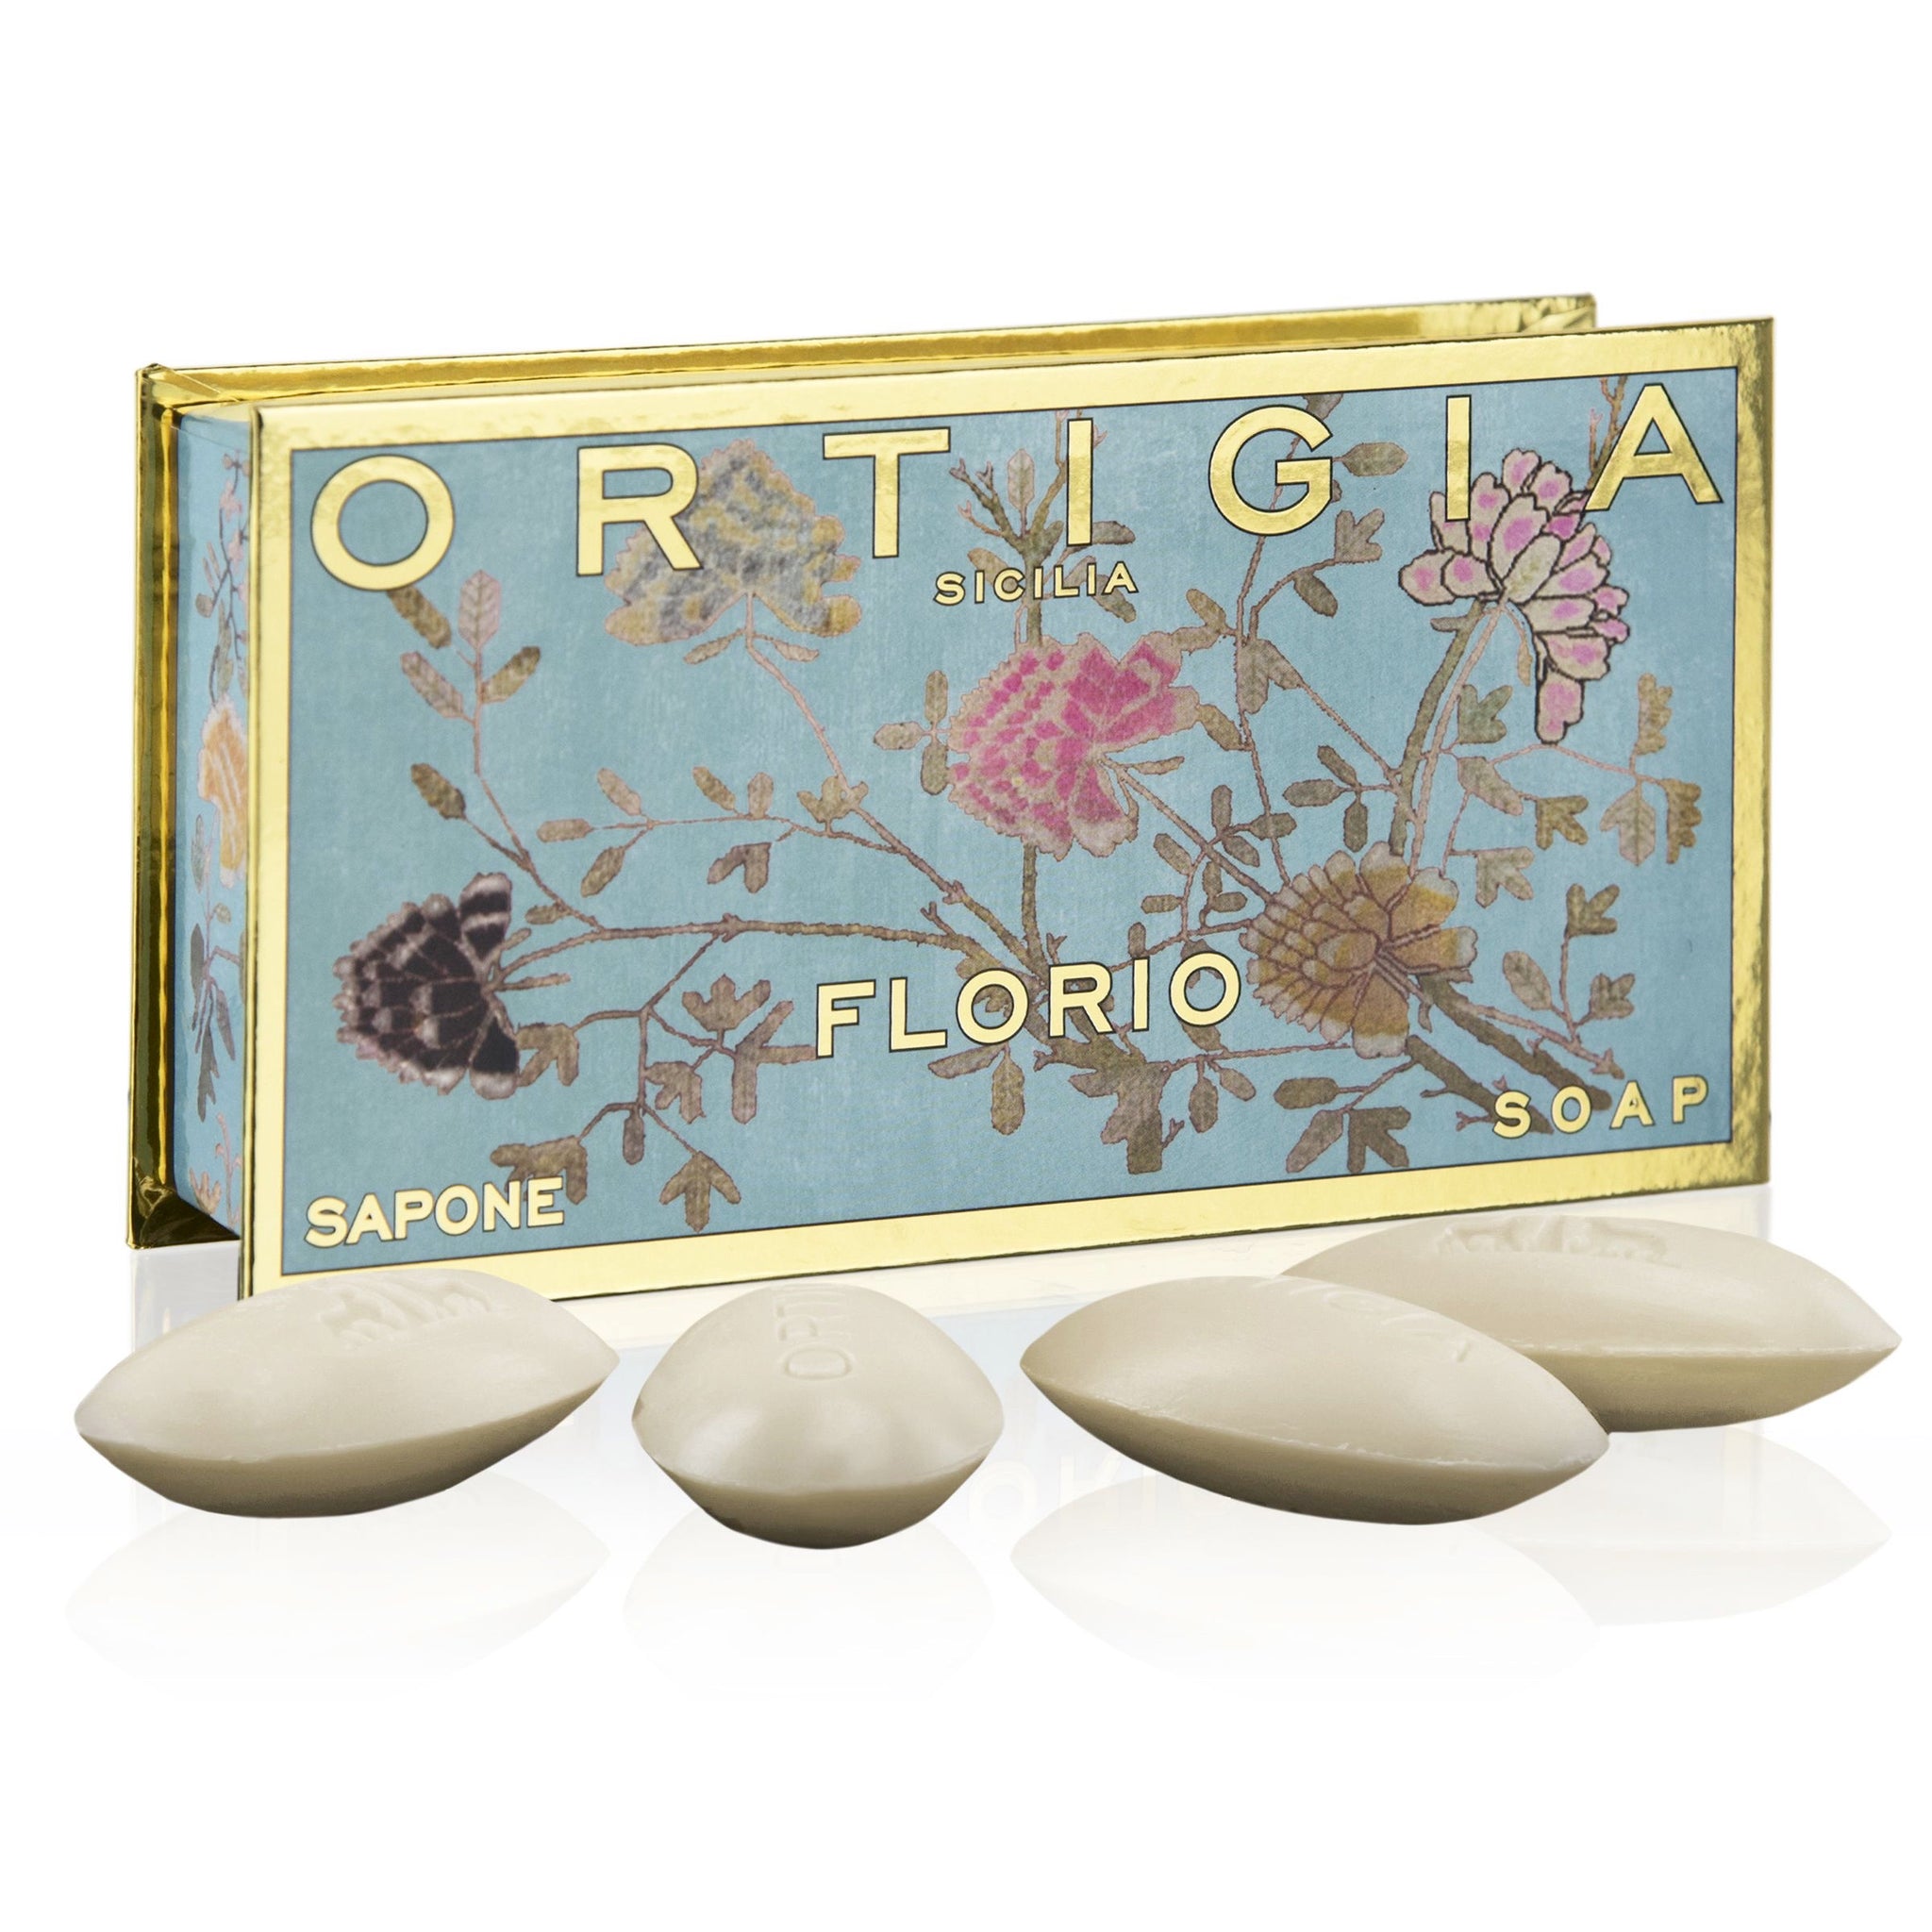 Ortigia Florio Olive Oil Soap | Small Boxed Set of 40g x 4